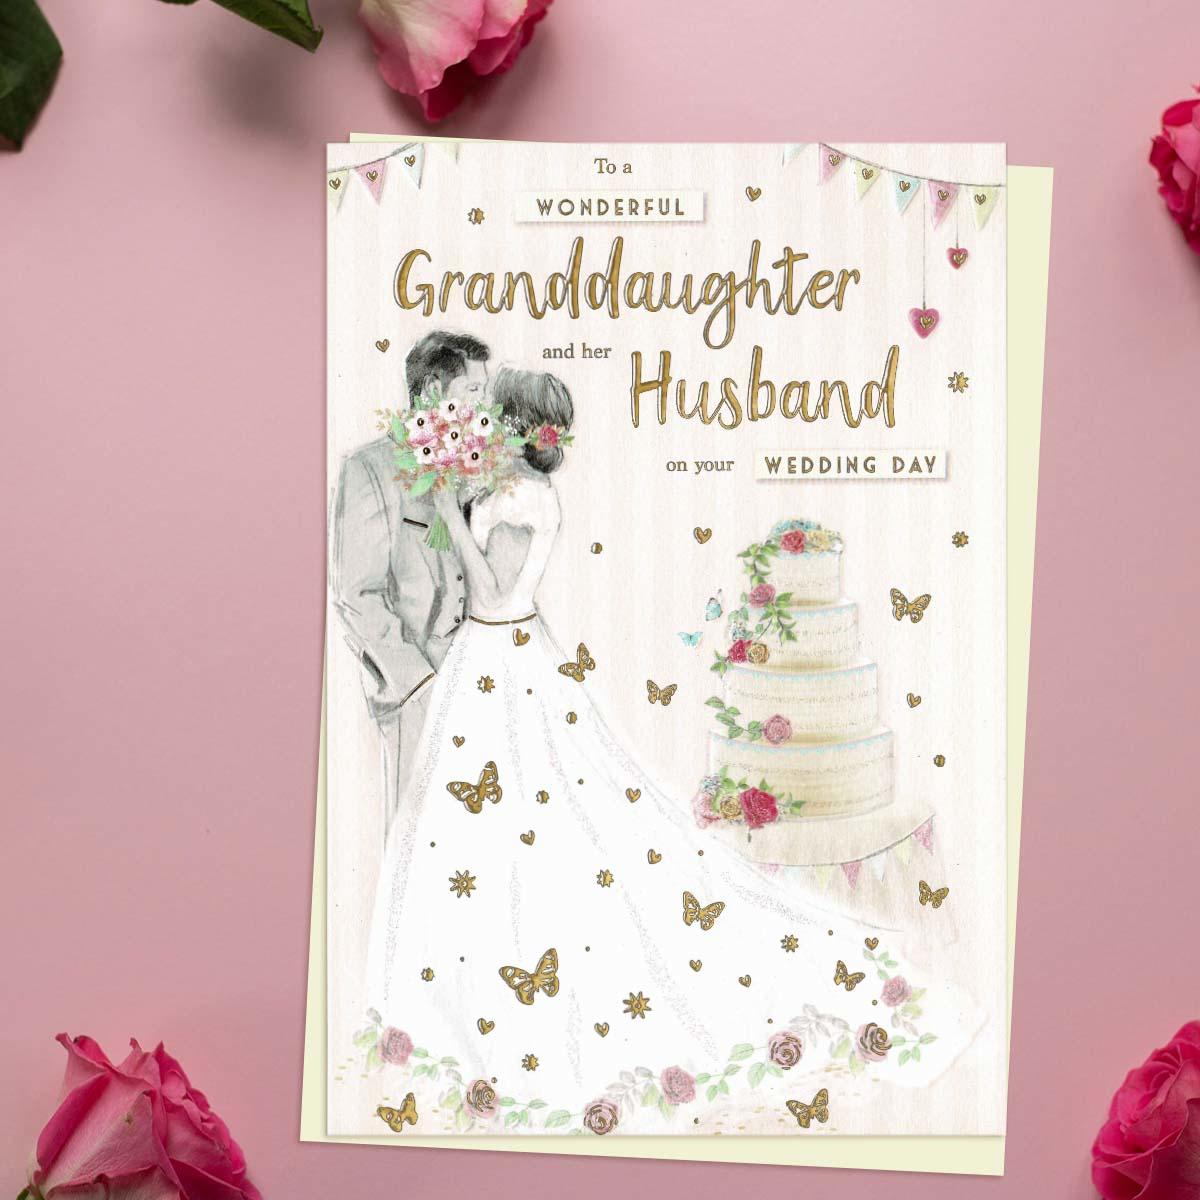 Granddaughter & Husband Wedding Day Card Front Image